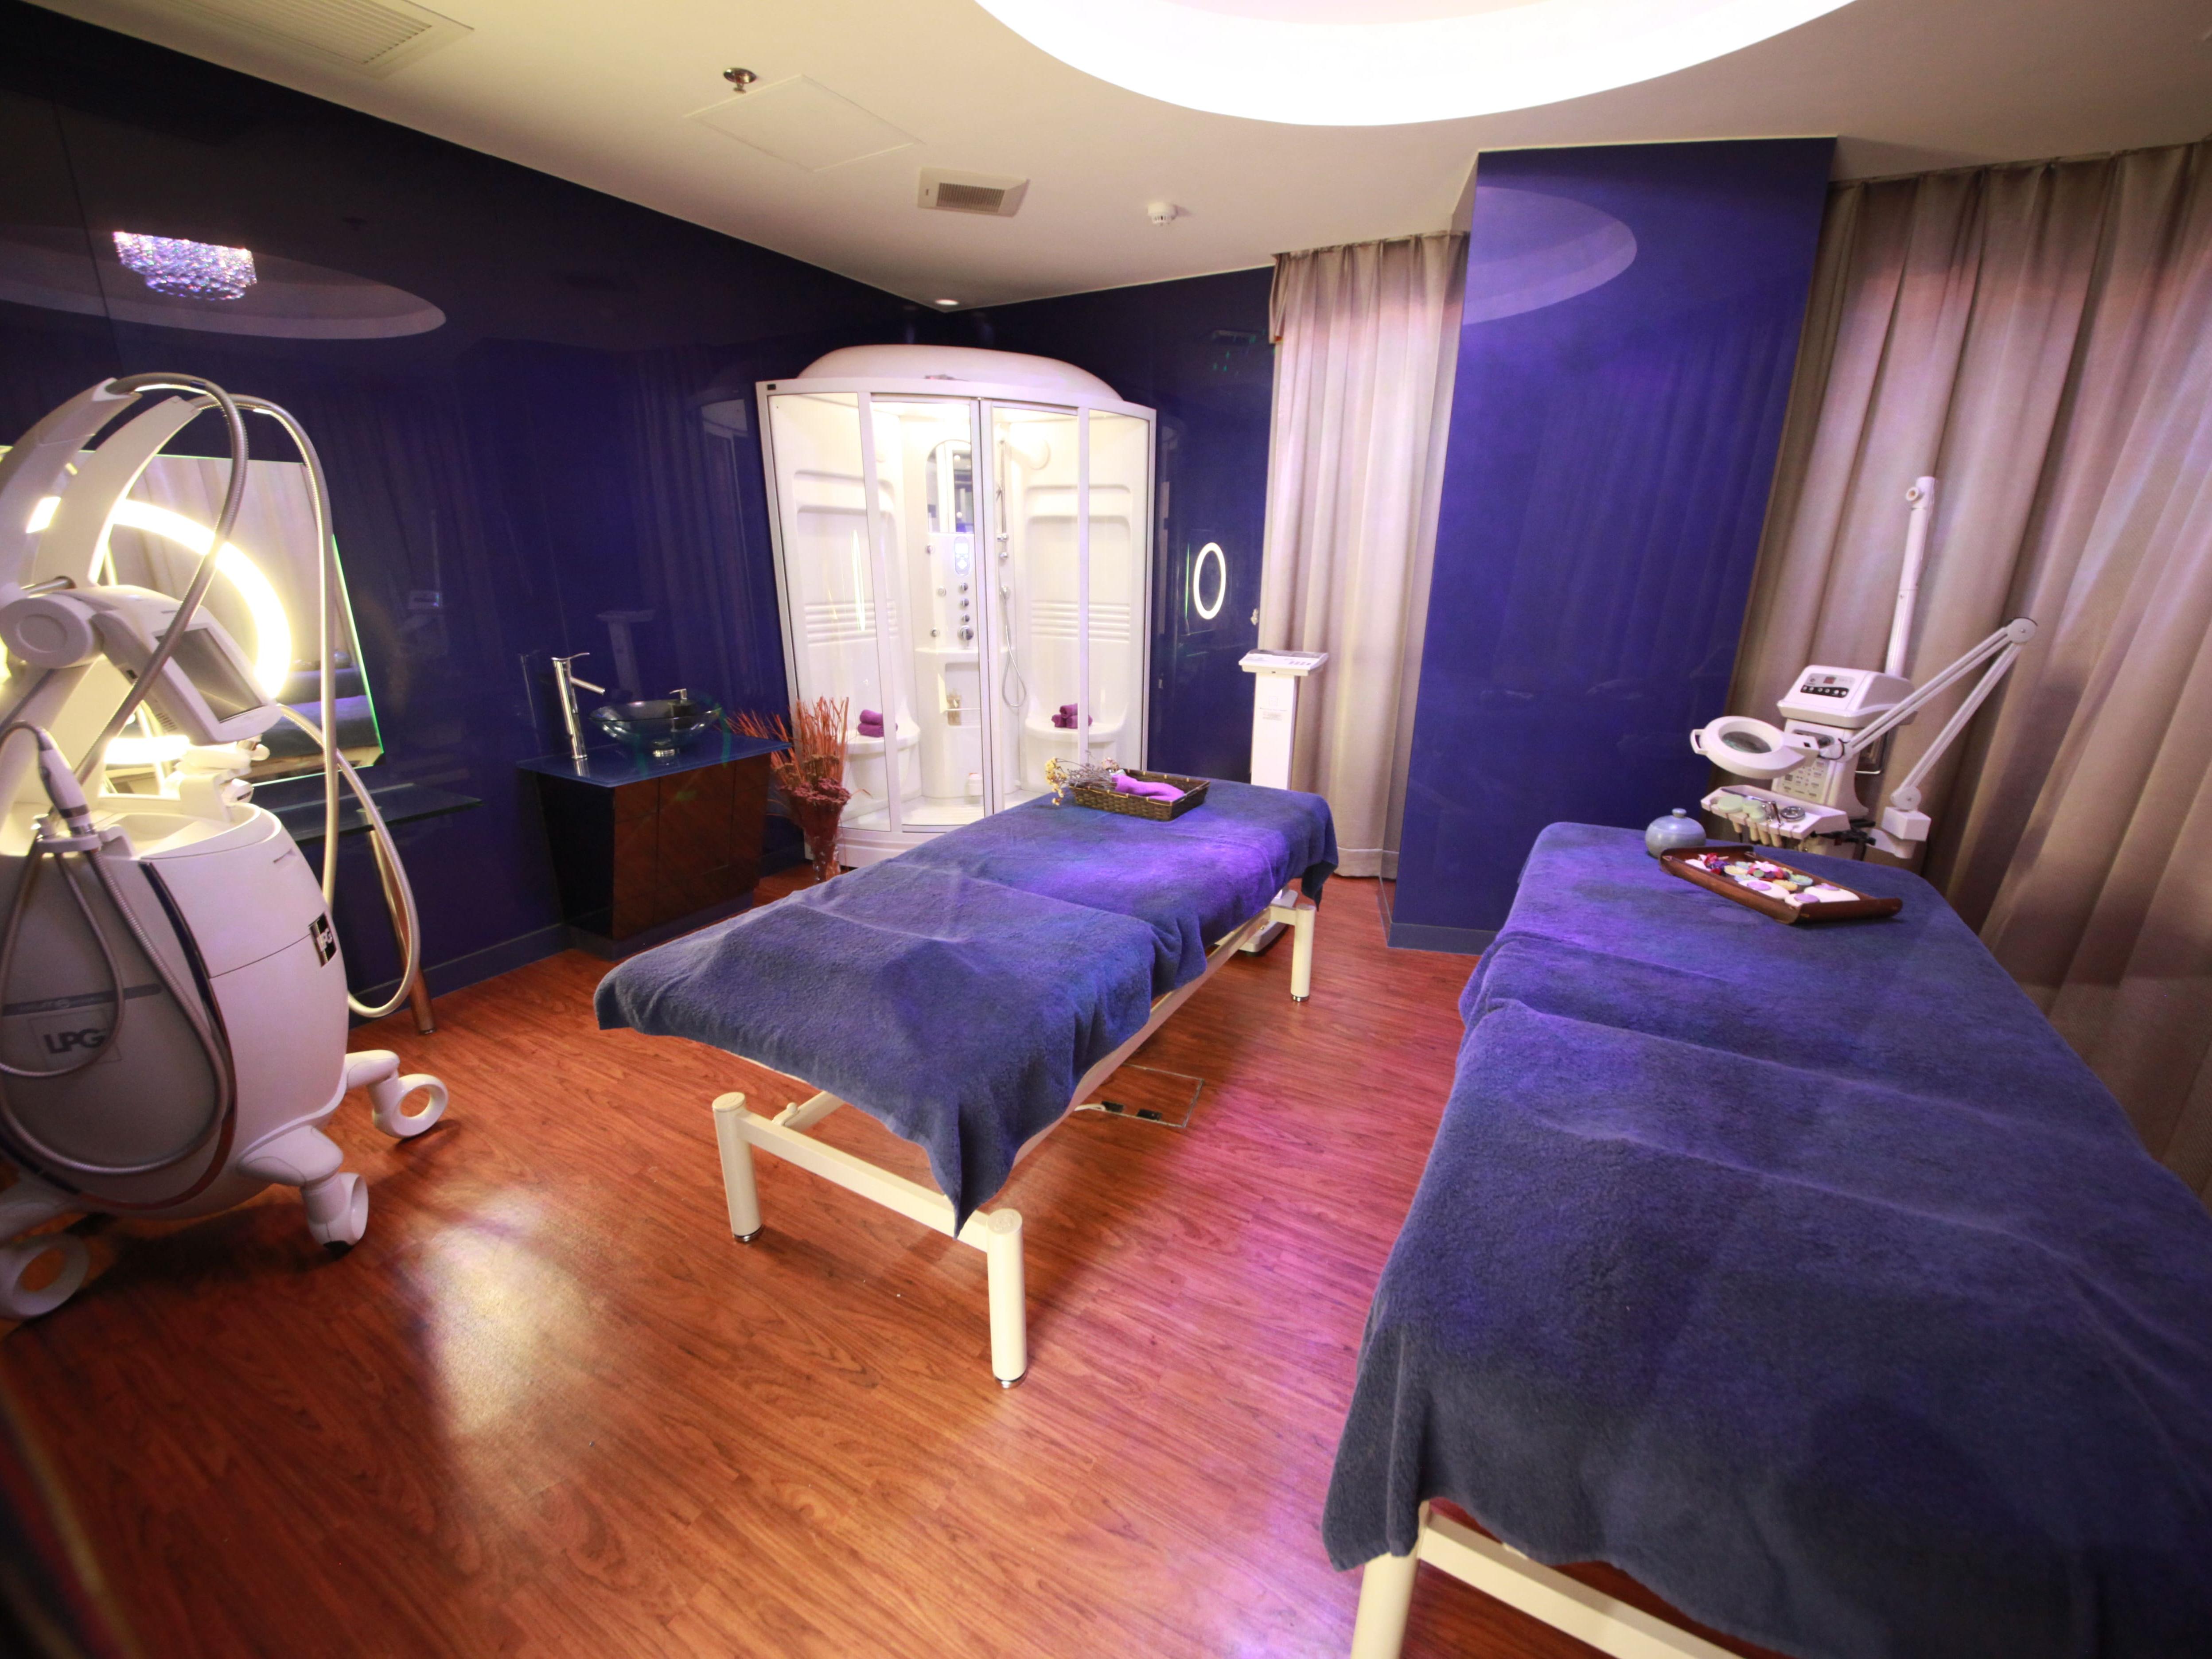 Beauty Care stream: Spa treatment room